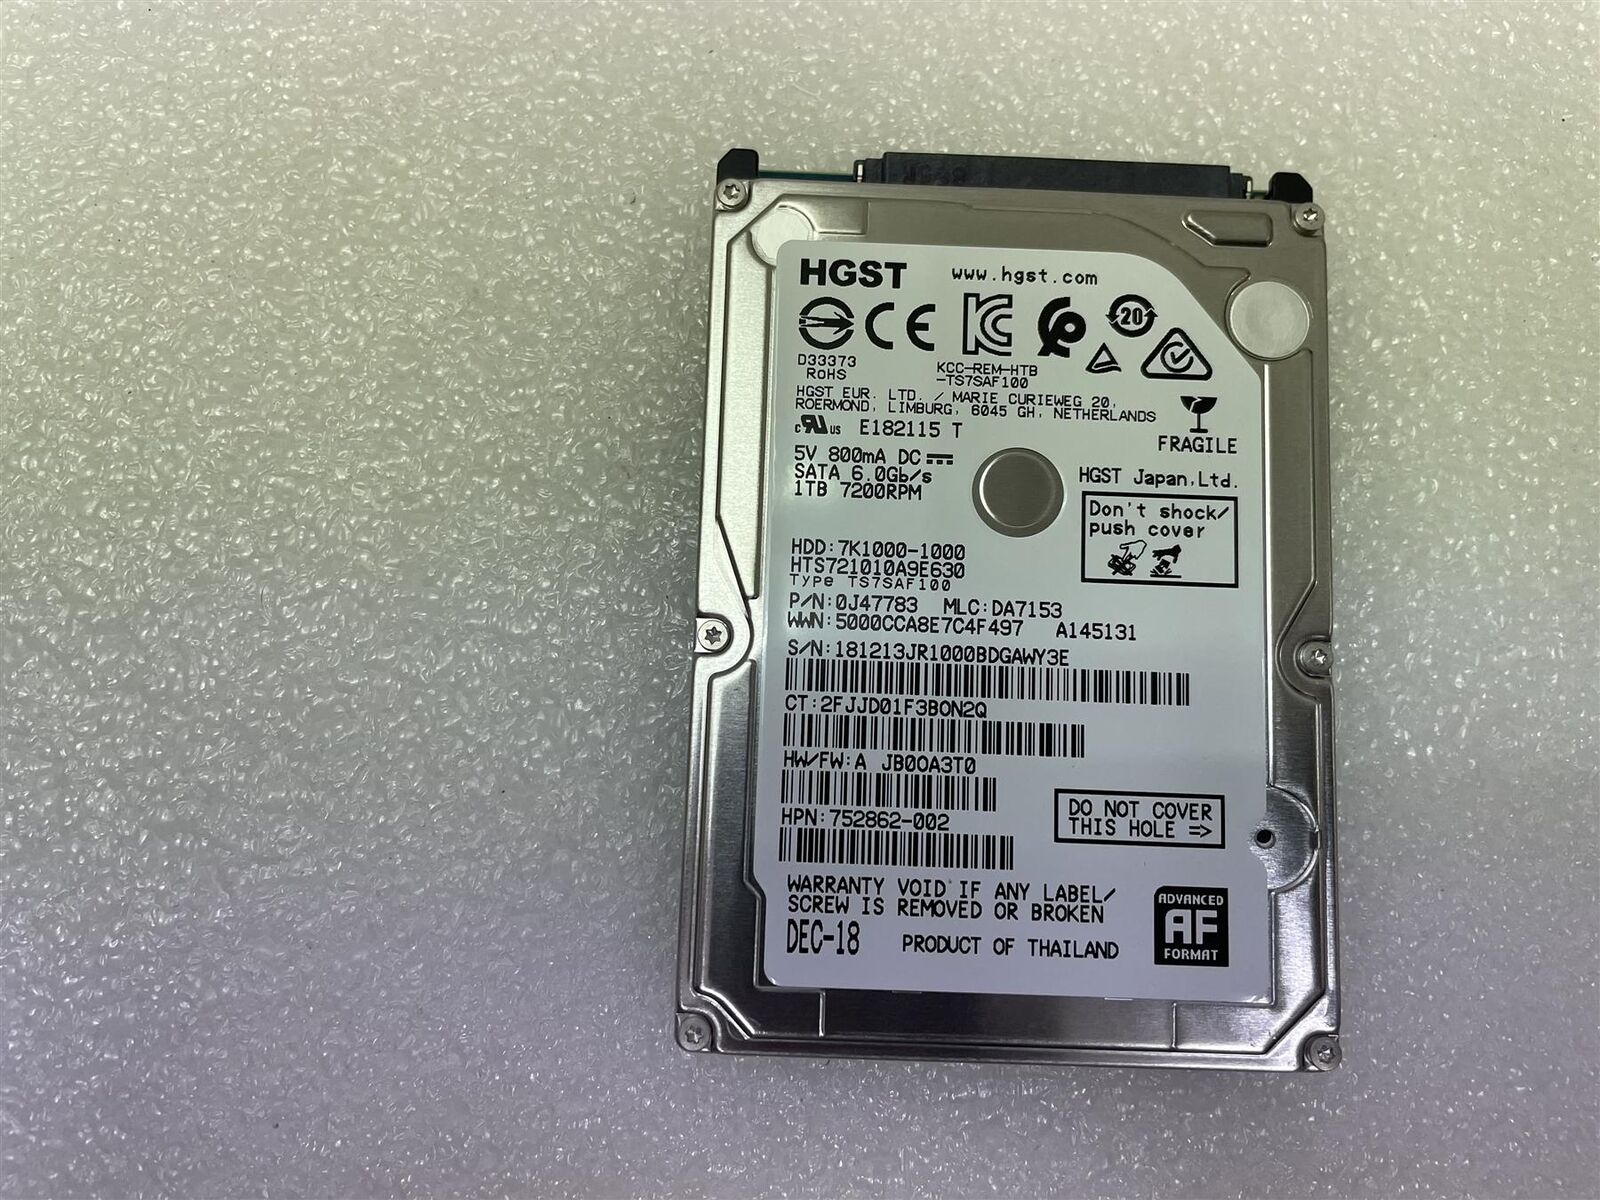 For HP L59057-001 HGST 7K1000-1000 1TB 7200RPM Hard Disk Drive HDD